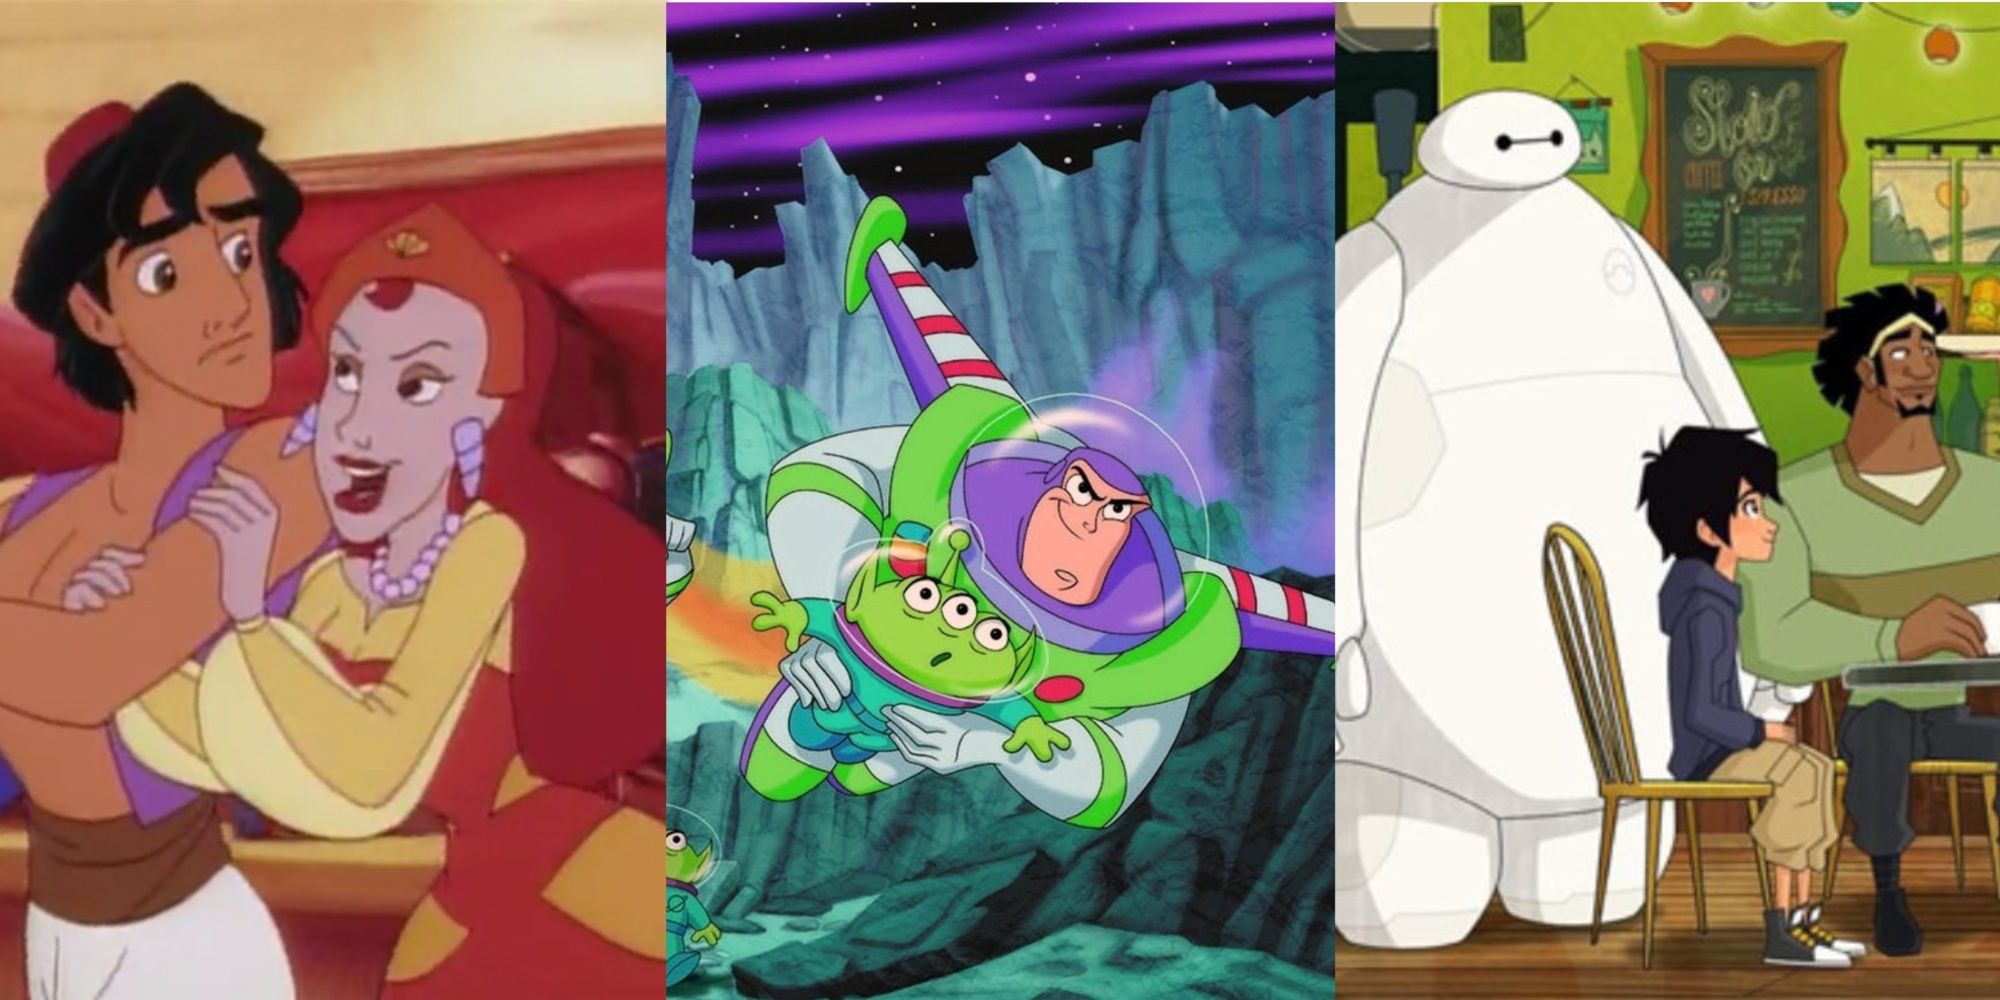 Disney movies series spin-offs Aladdin, Buzz Lightyear, and Big Hero 6